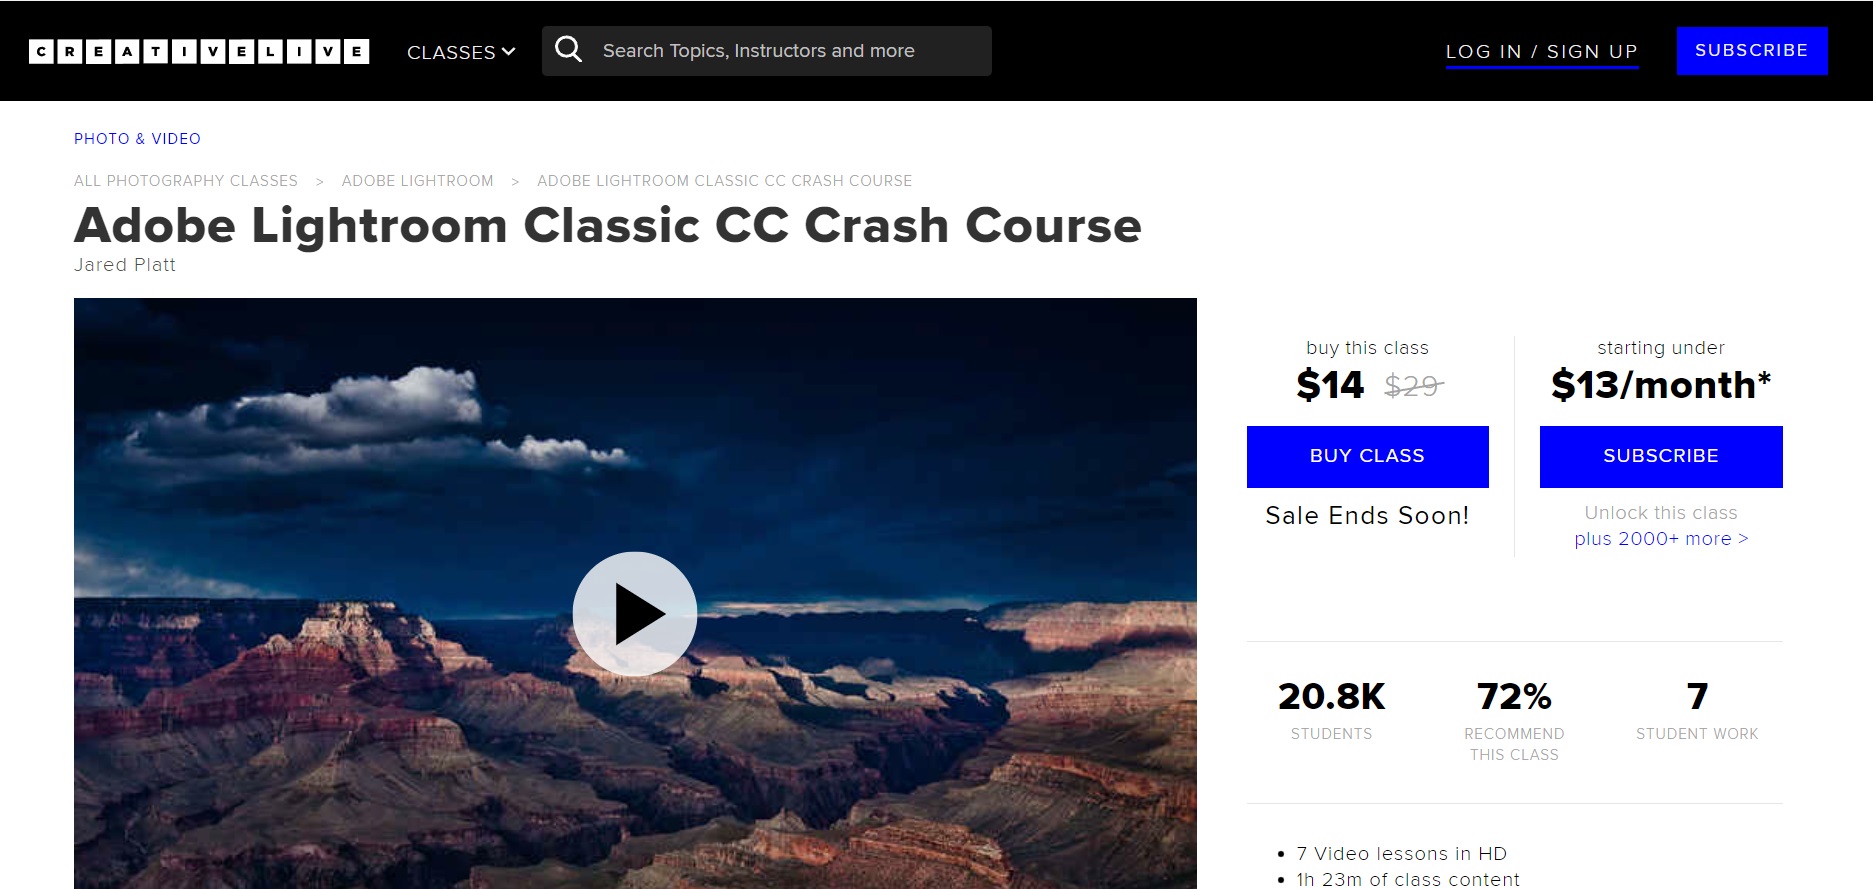 Adobe Lightroom Classic CC Crash Course  